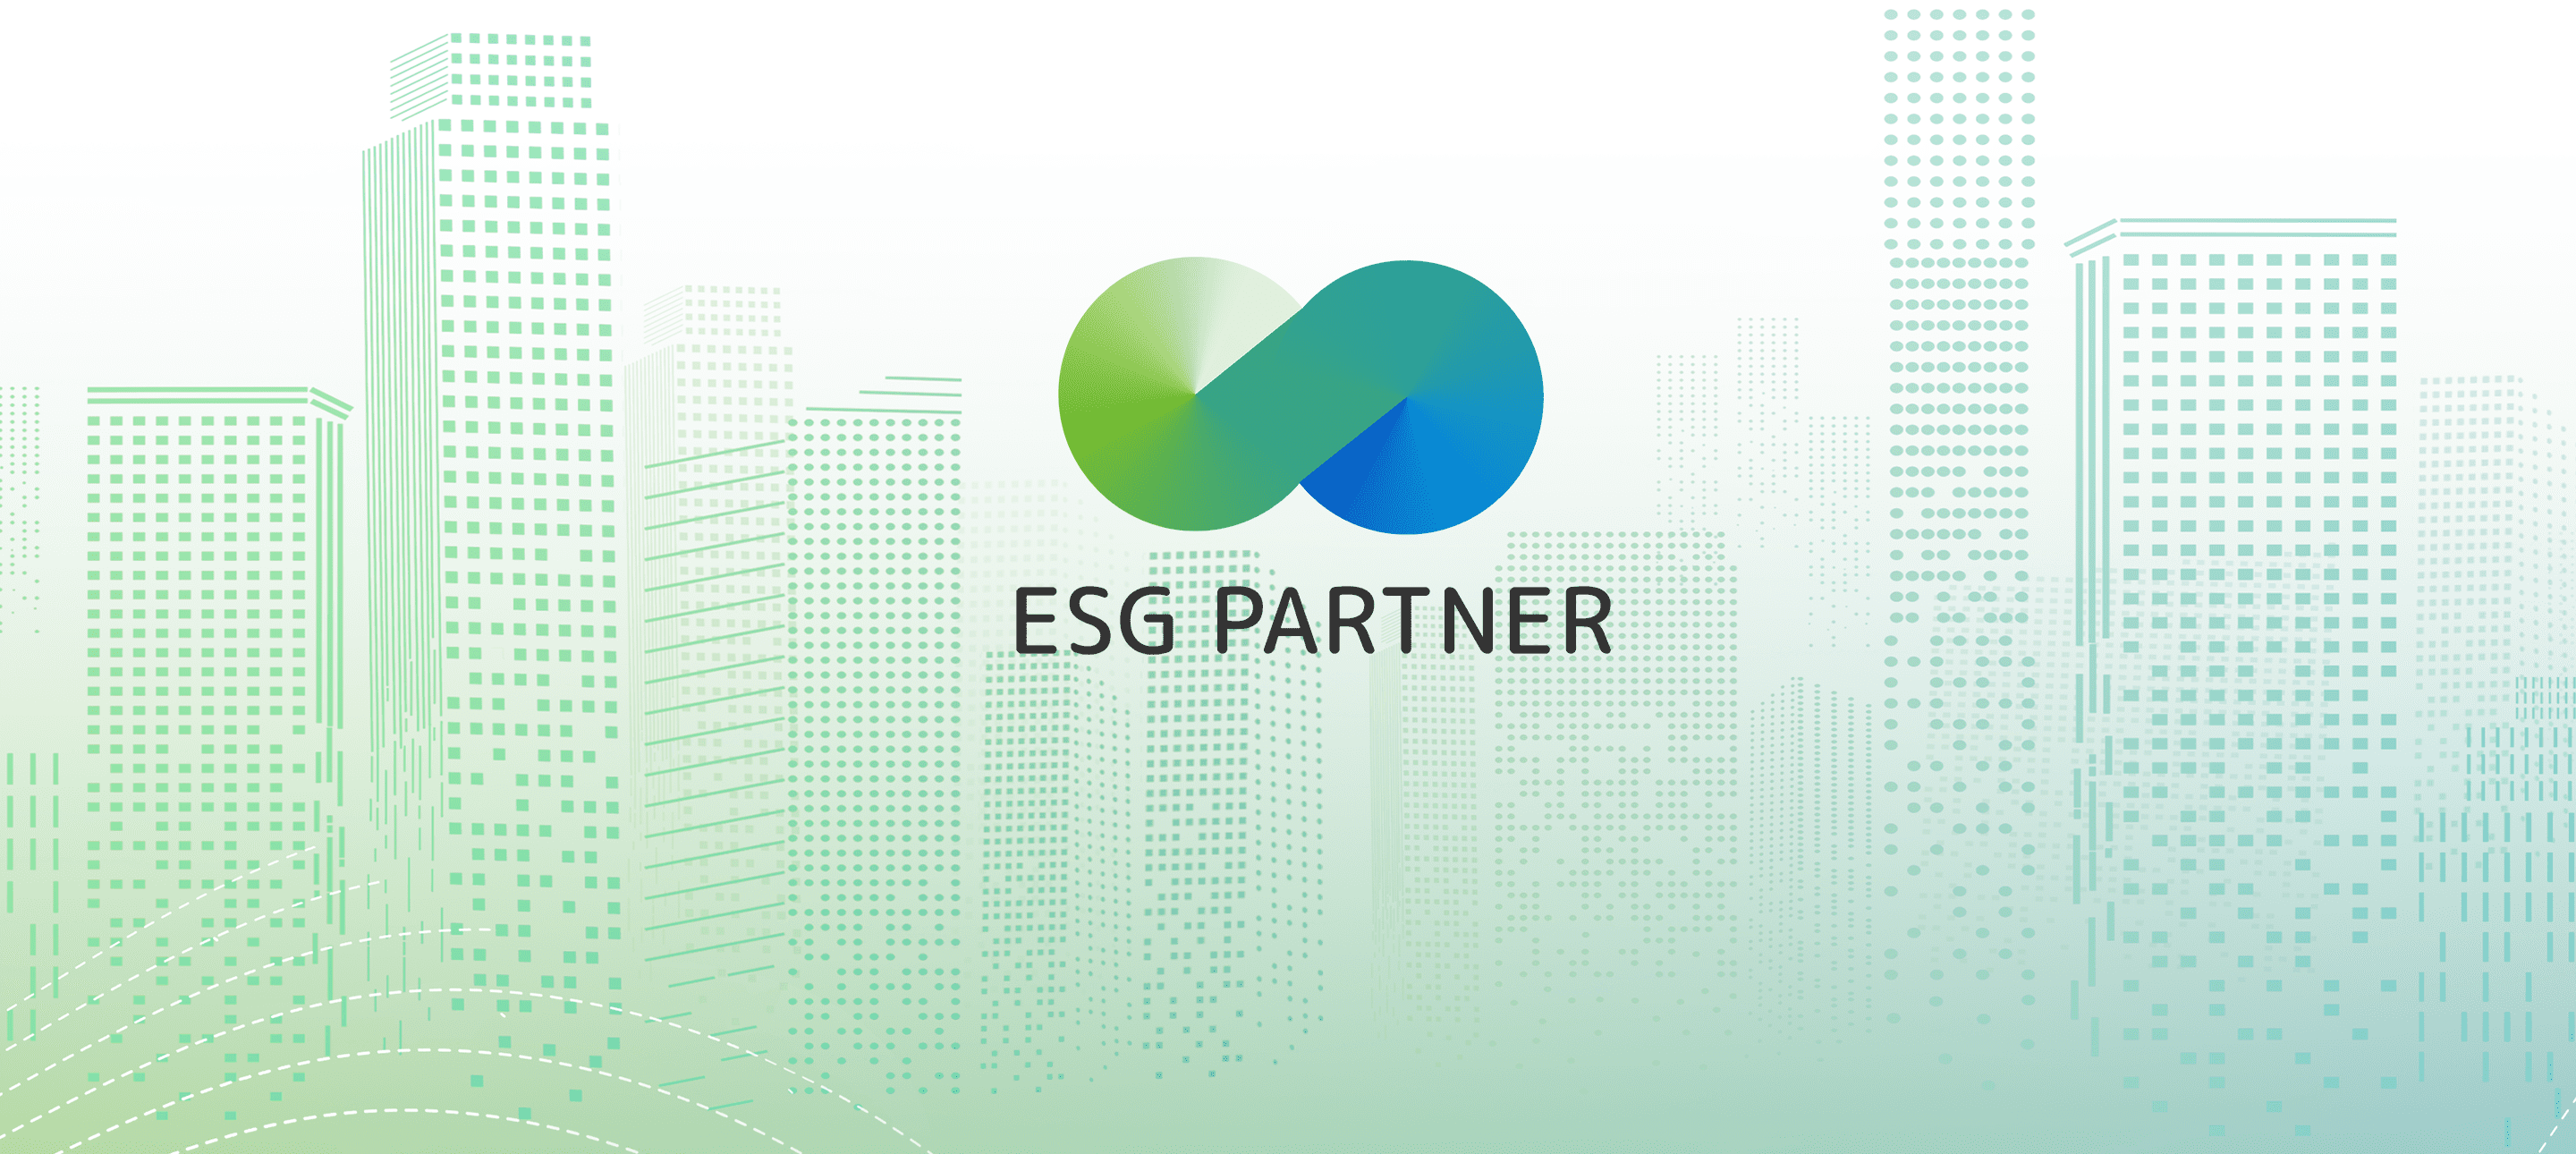 ESG PARTNER——Consolidated Digital Sustainability Partner